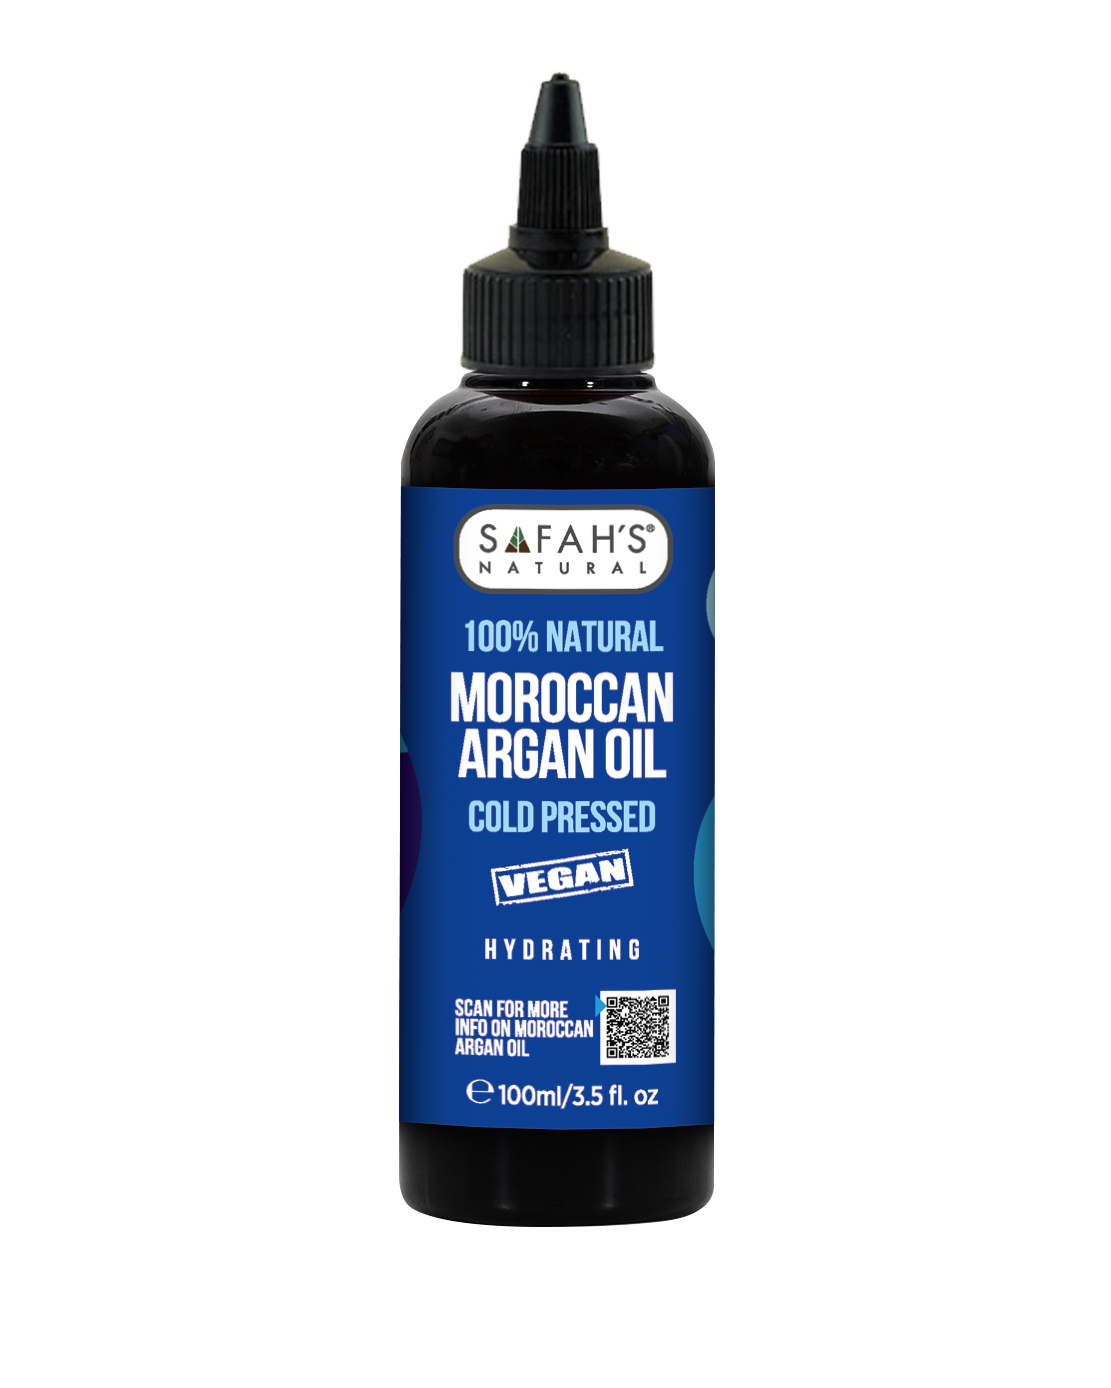 100% Natural Moroccan Argan oil - All-Natural Nourishment for Hair, Skin & Nails